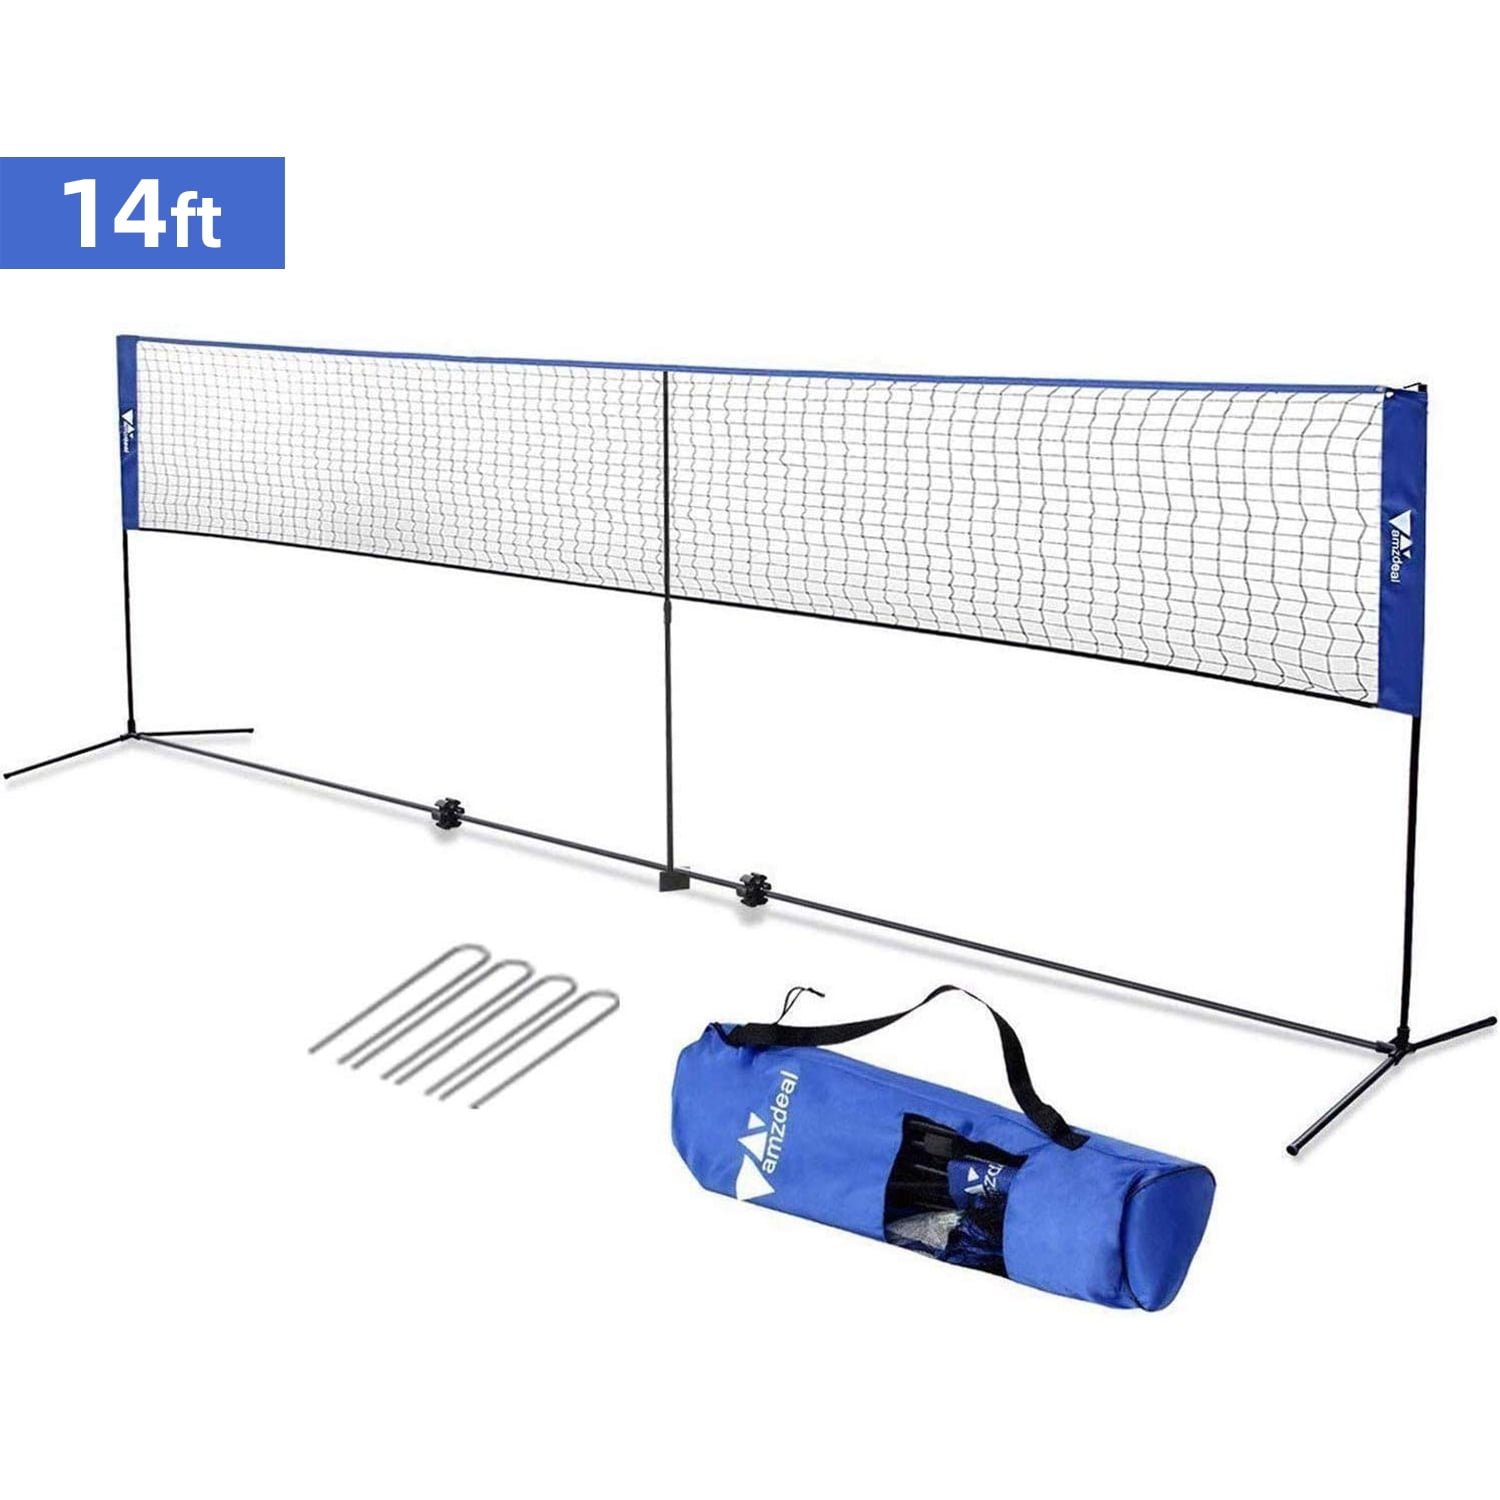 Portable Standard Training Badminton Volleyball Tennis Net Outdoor Sports Mesh 